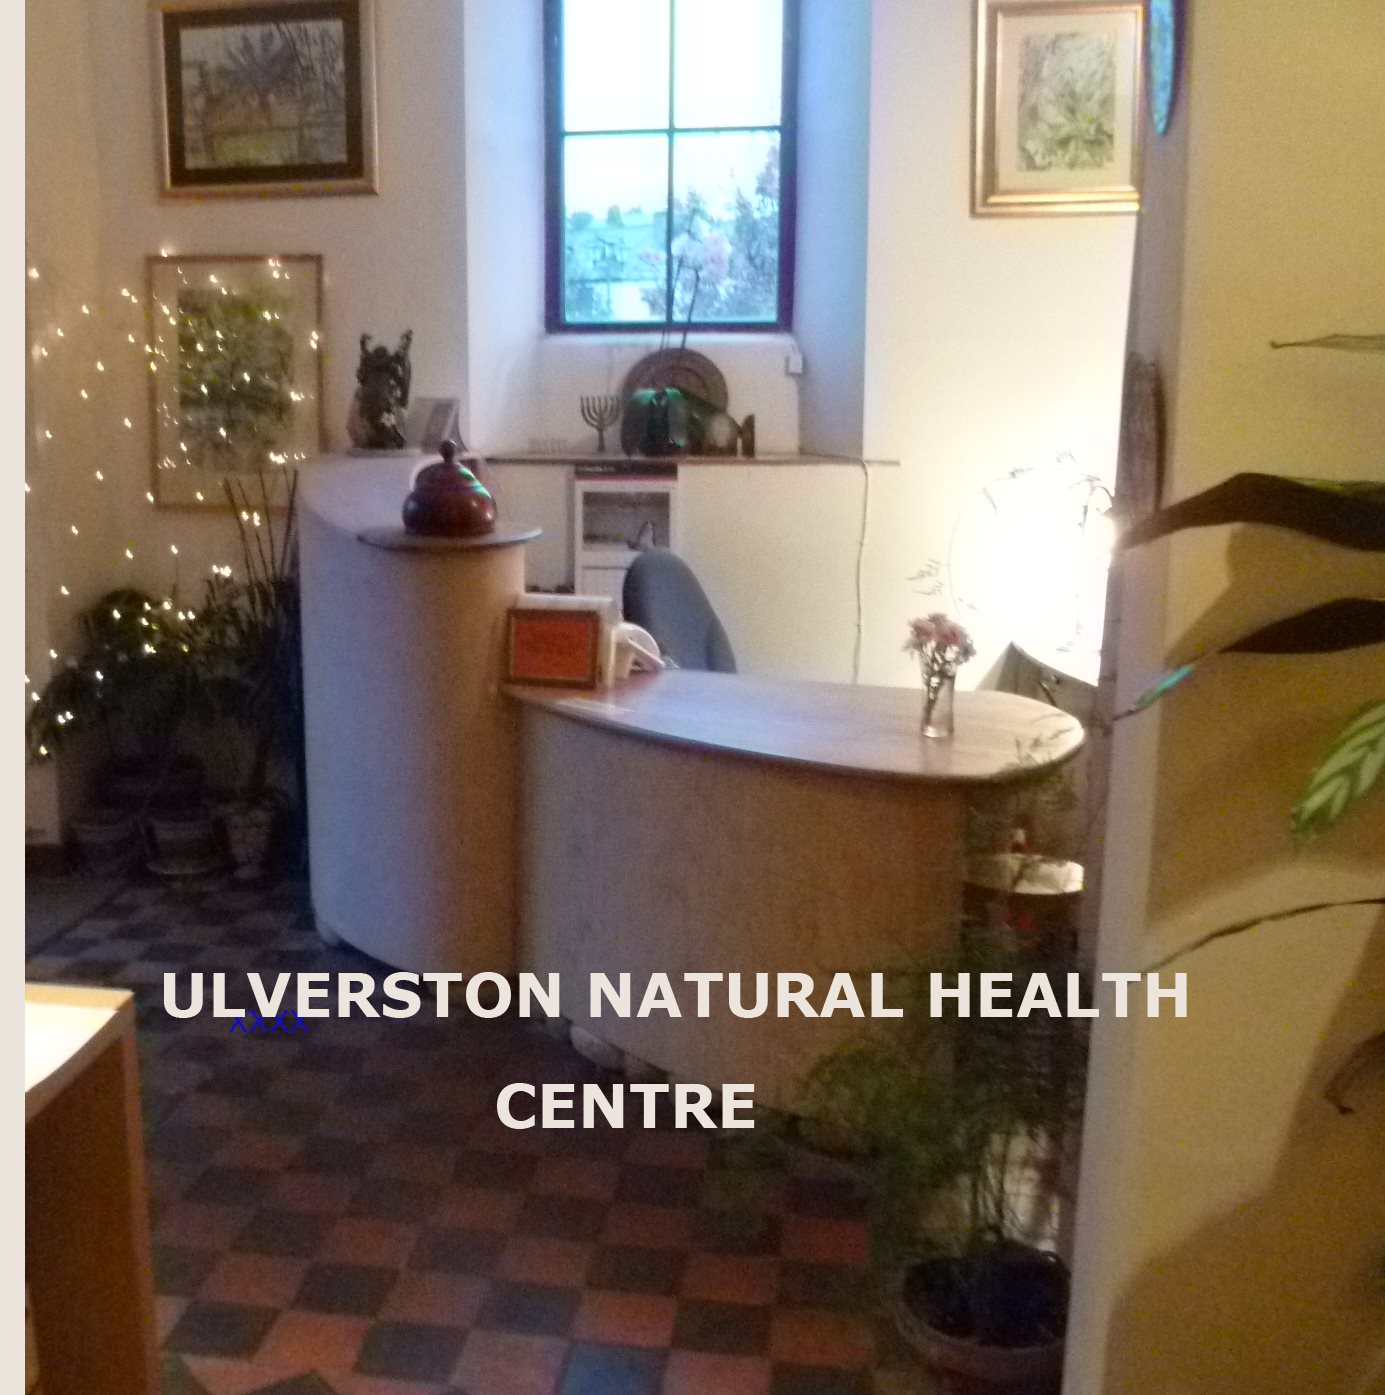 (c) Ulverston-natural-health-centre.co.uk